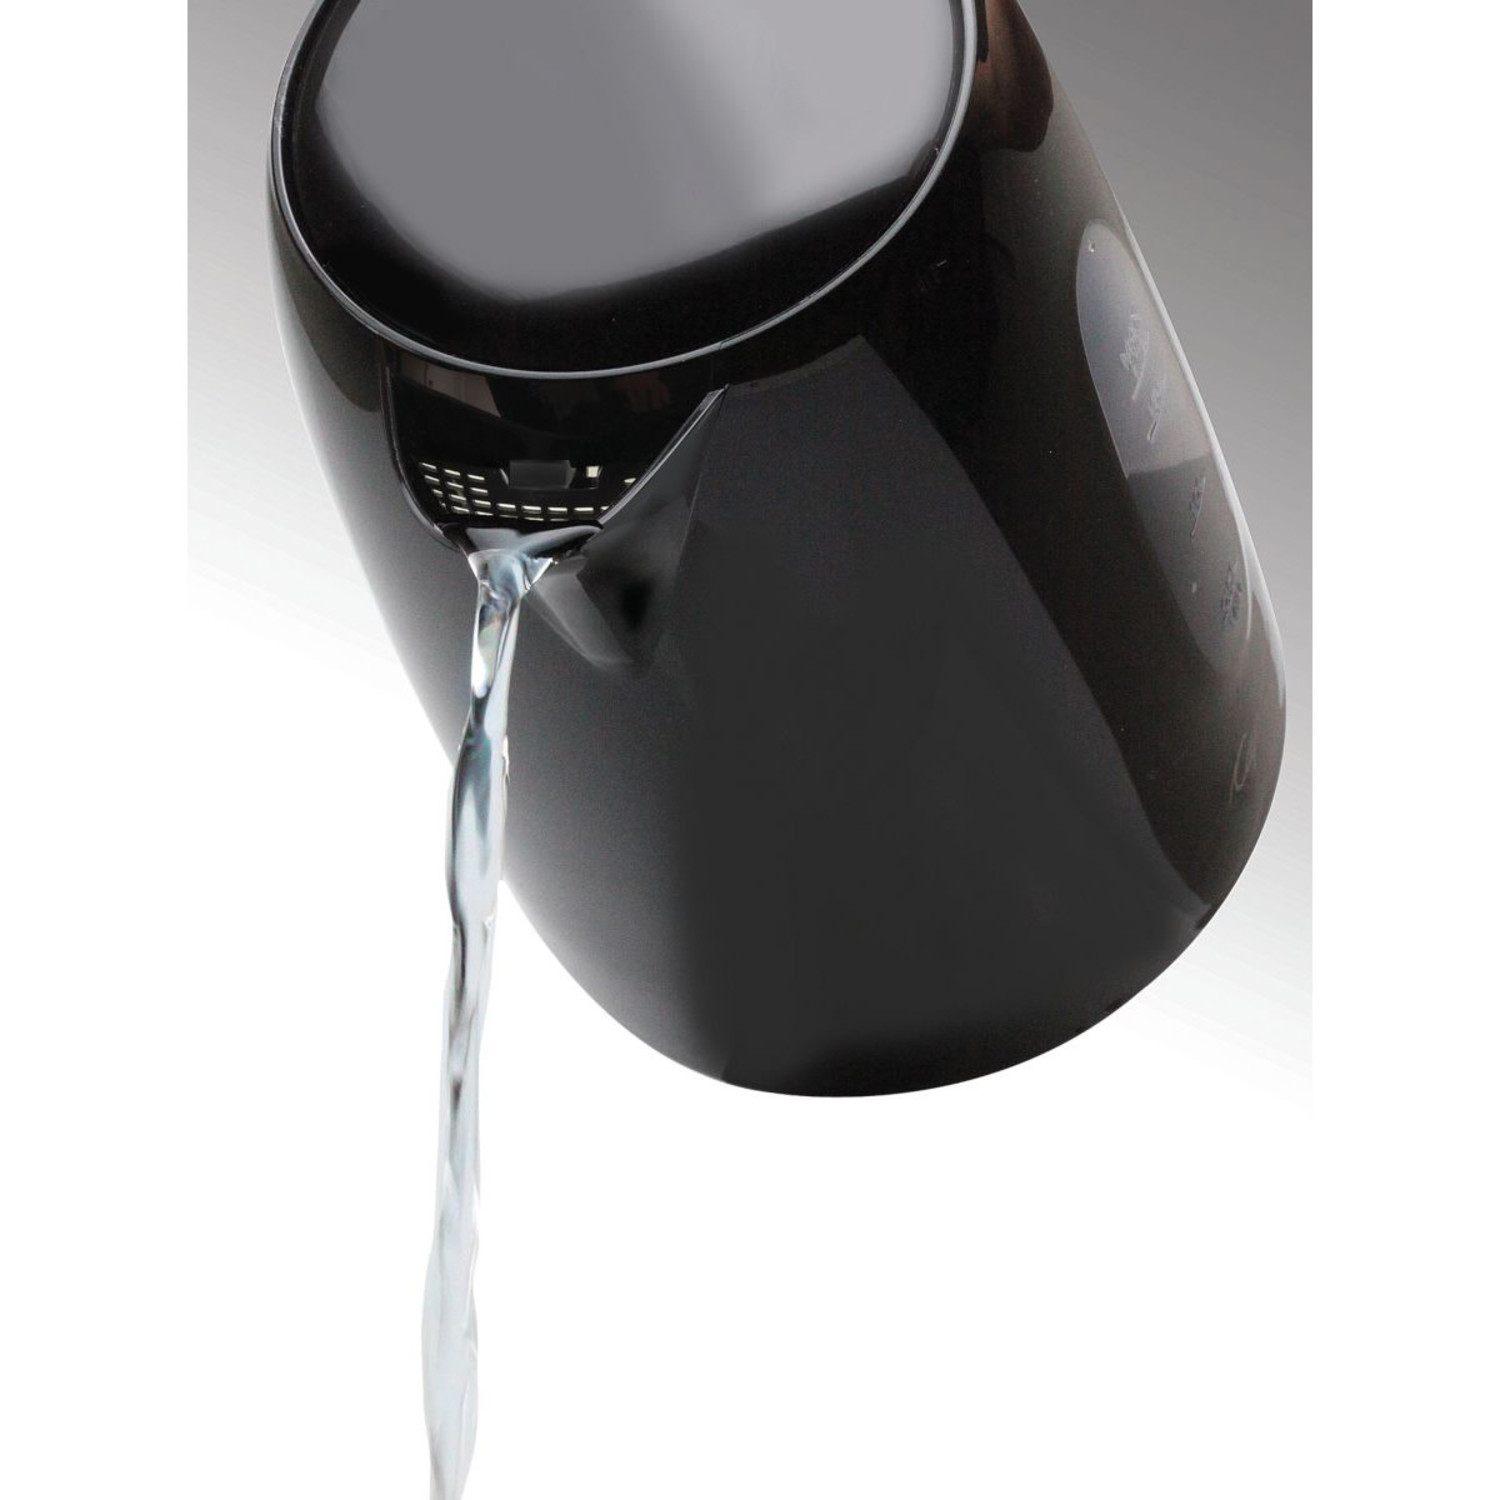 Capresso Electric Water Kettle Black, 57 oz